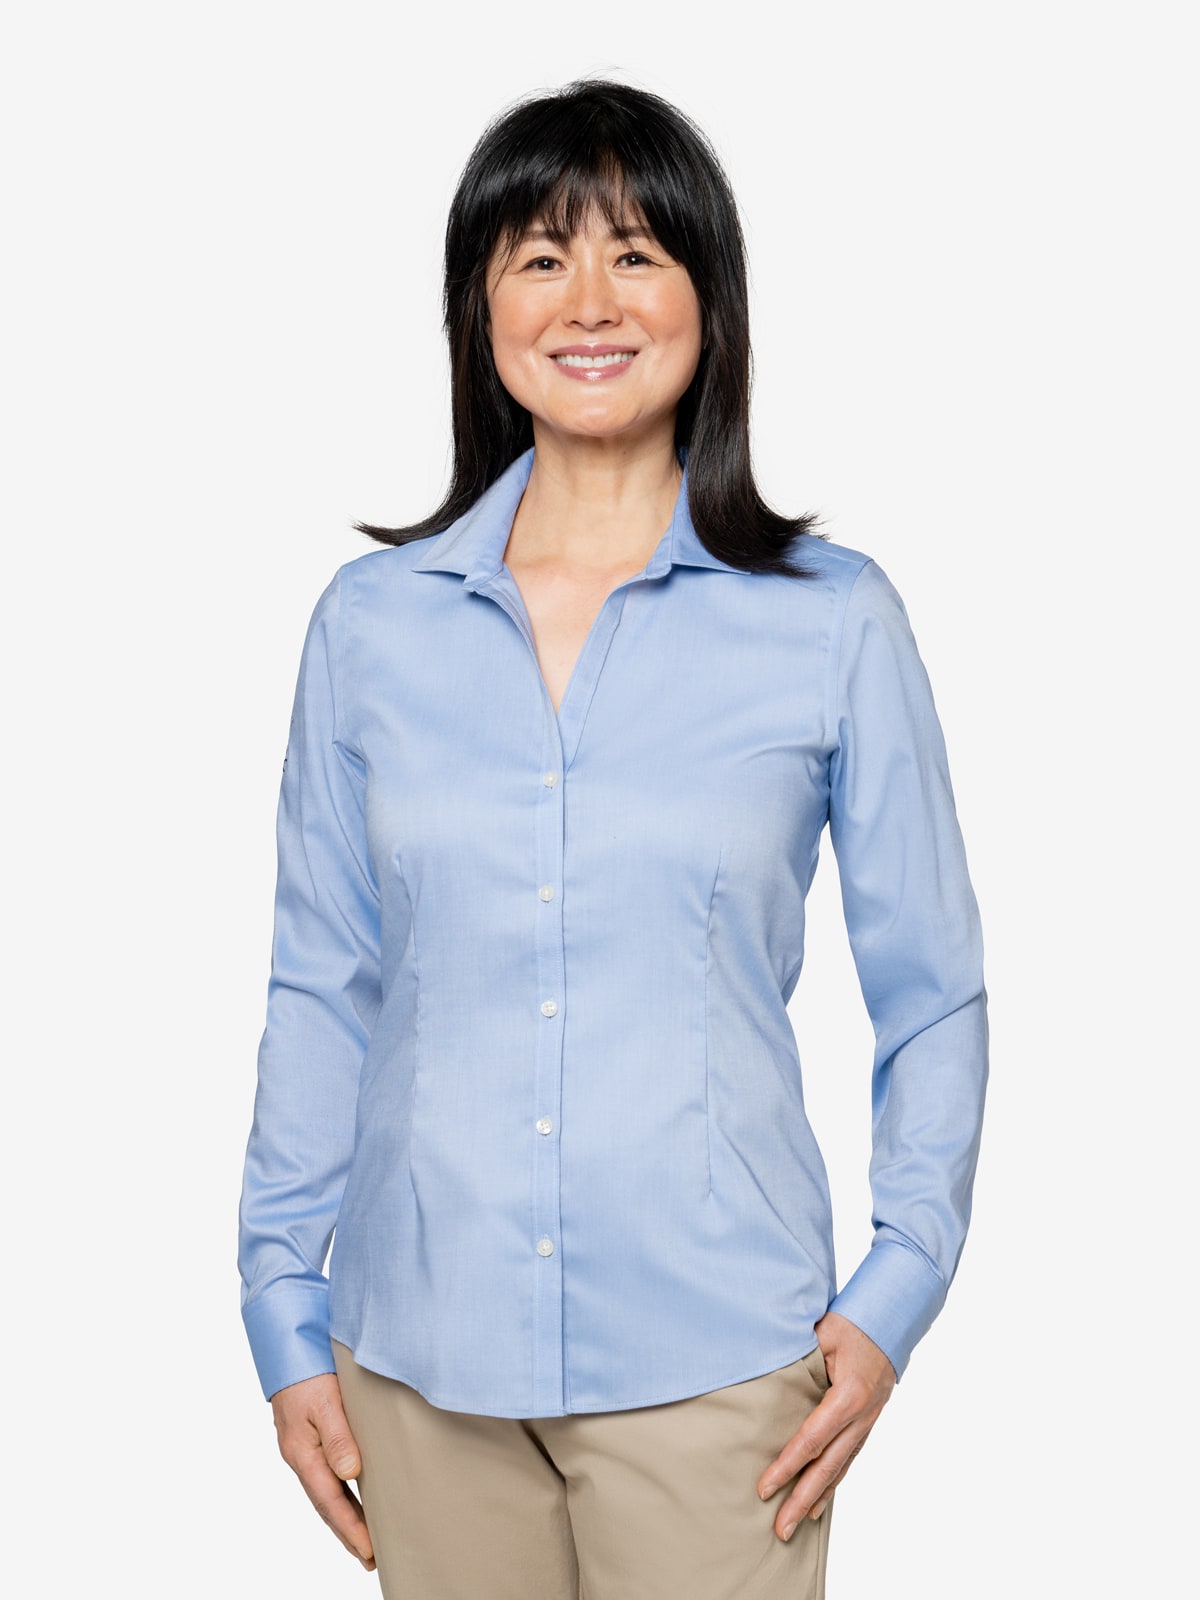 Women's Wrinkle-Resistant Oxford Shirt